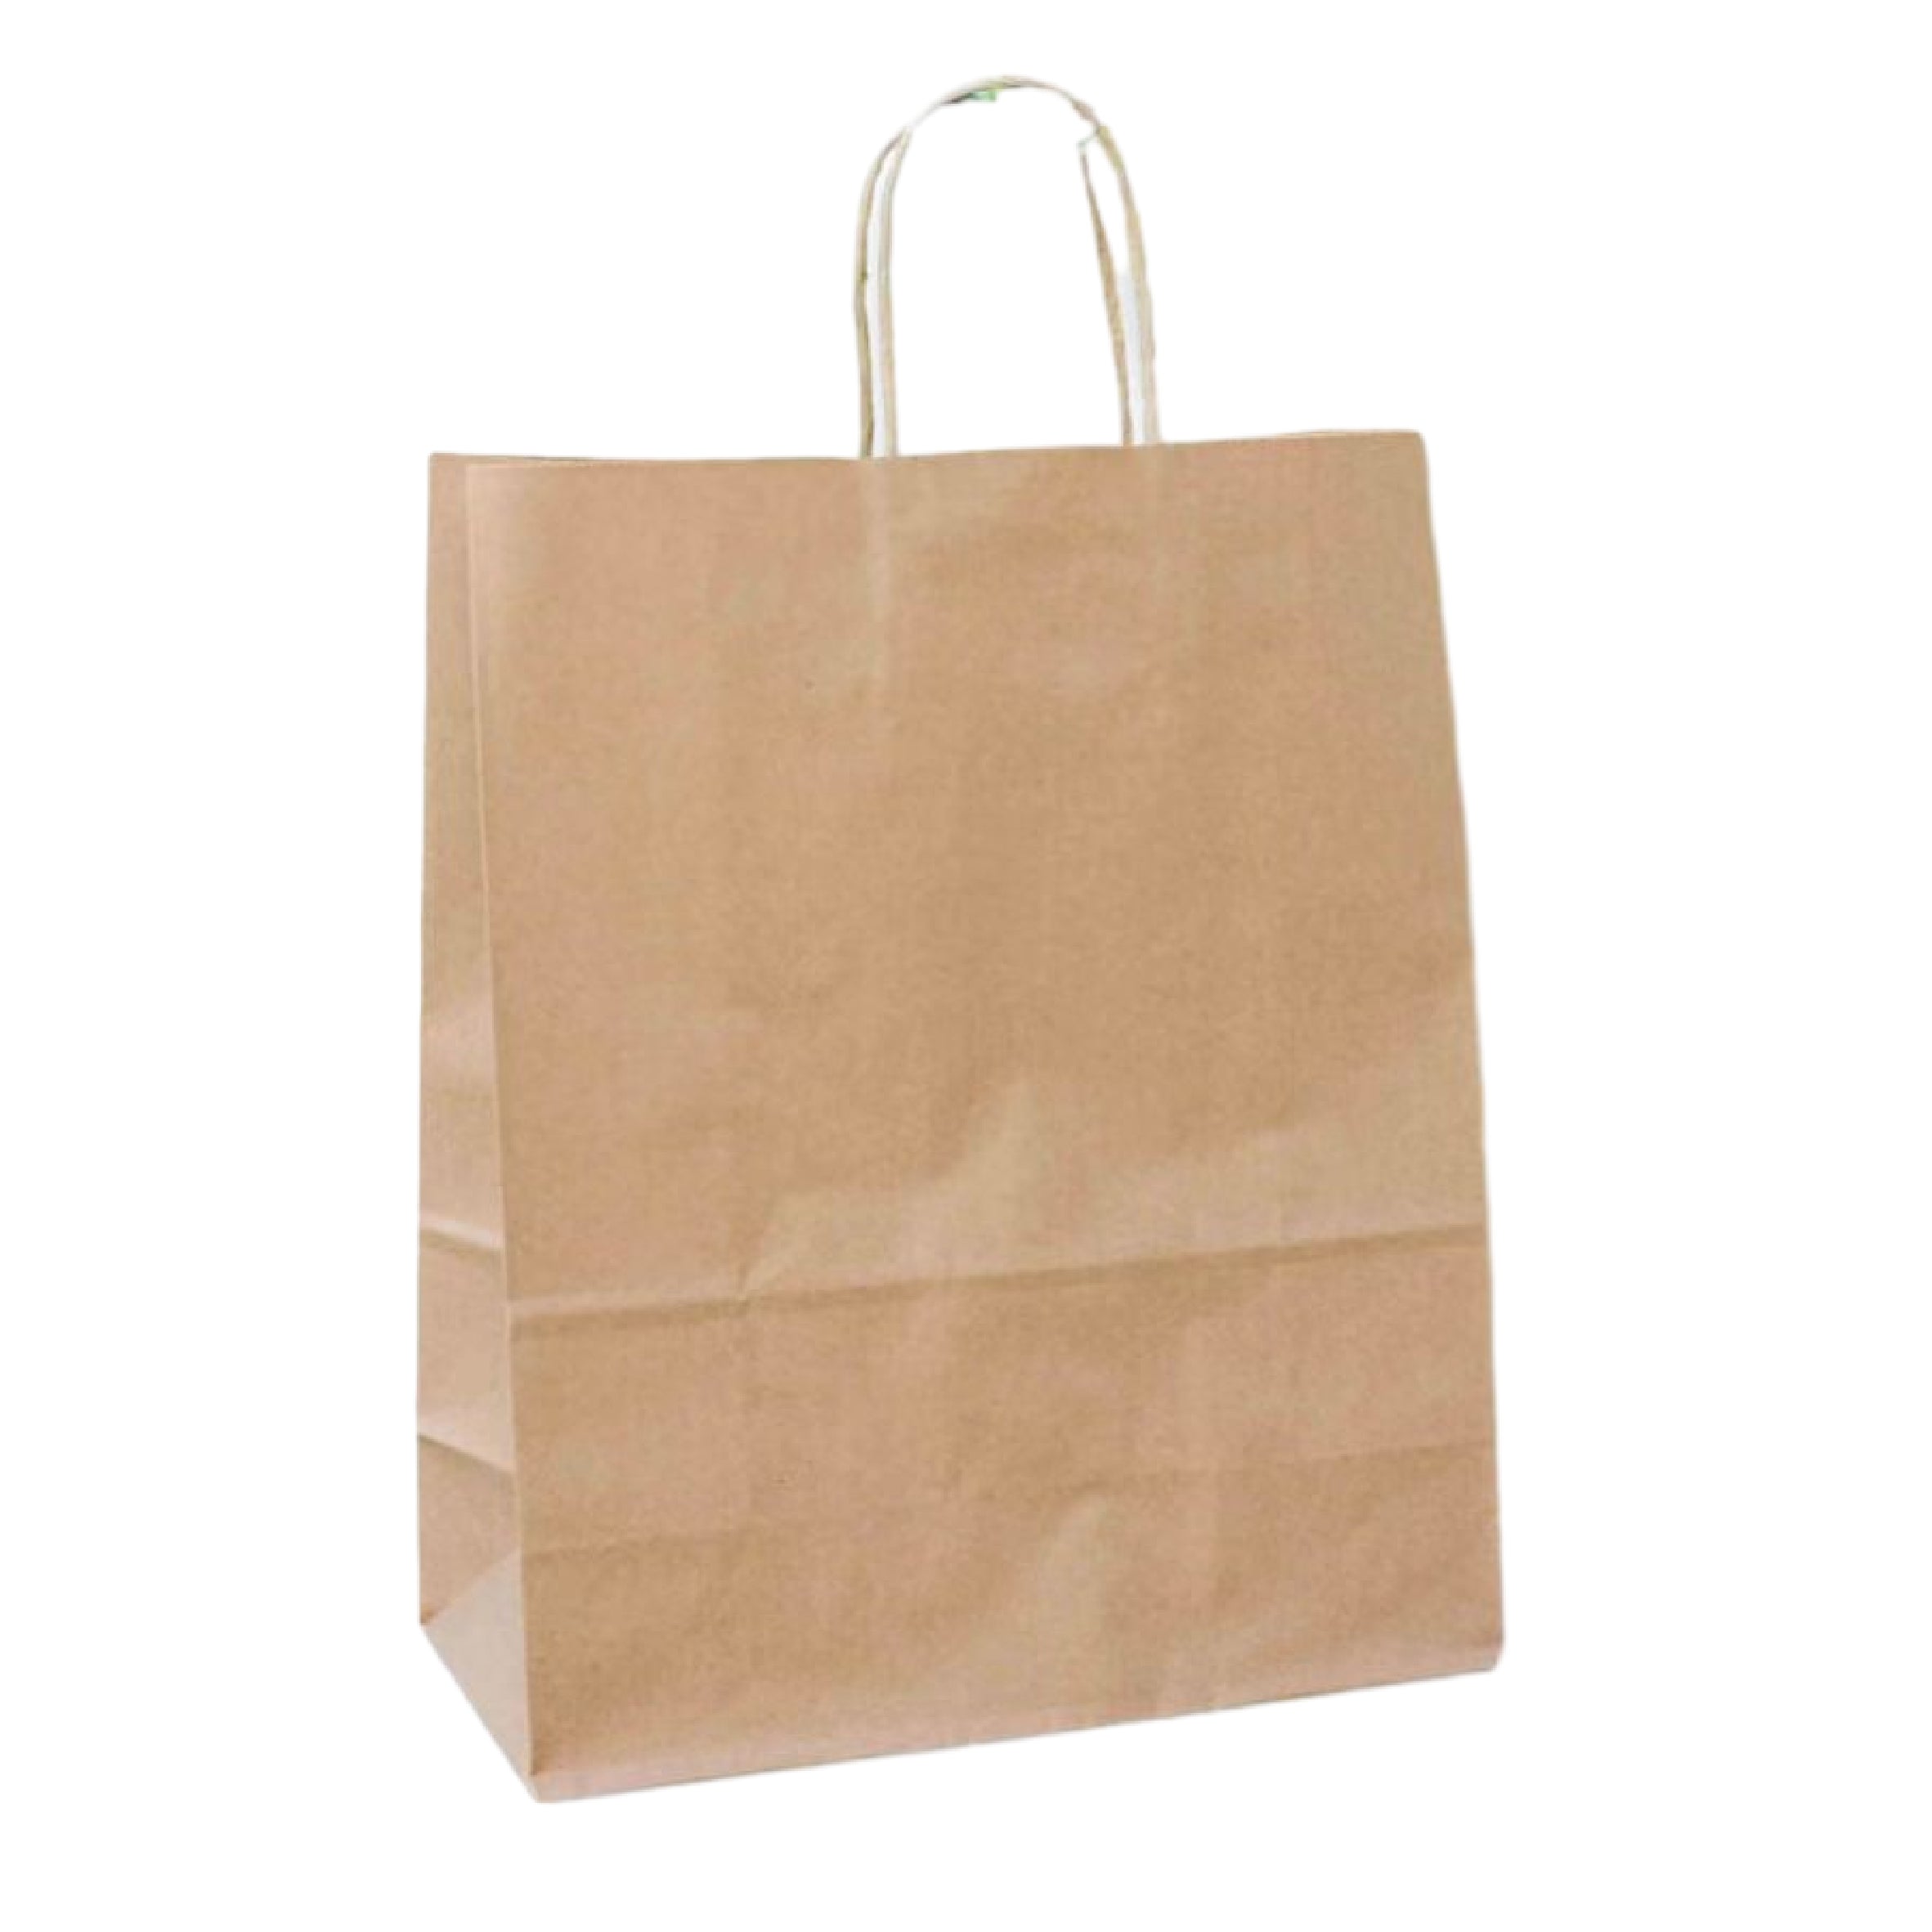 13 x 15.7 x 5.9 inch Paper Handle Shopping Bag